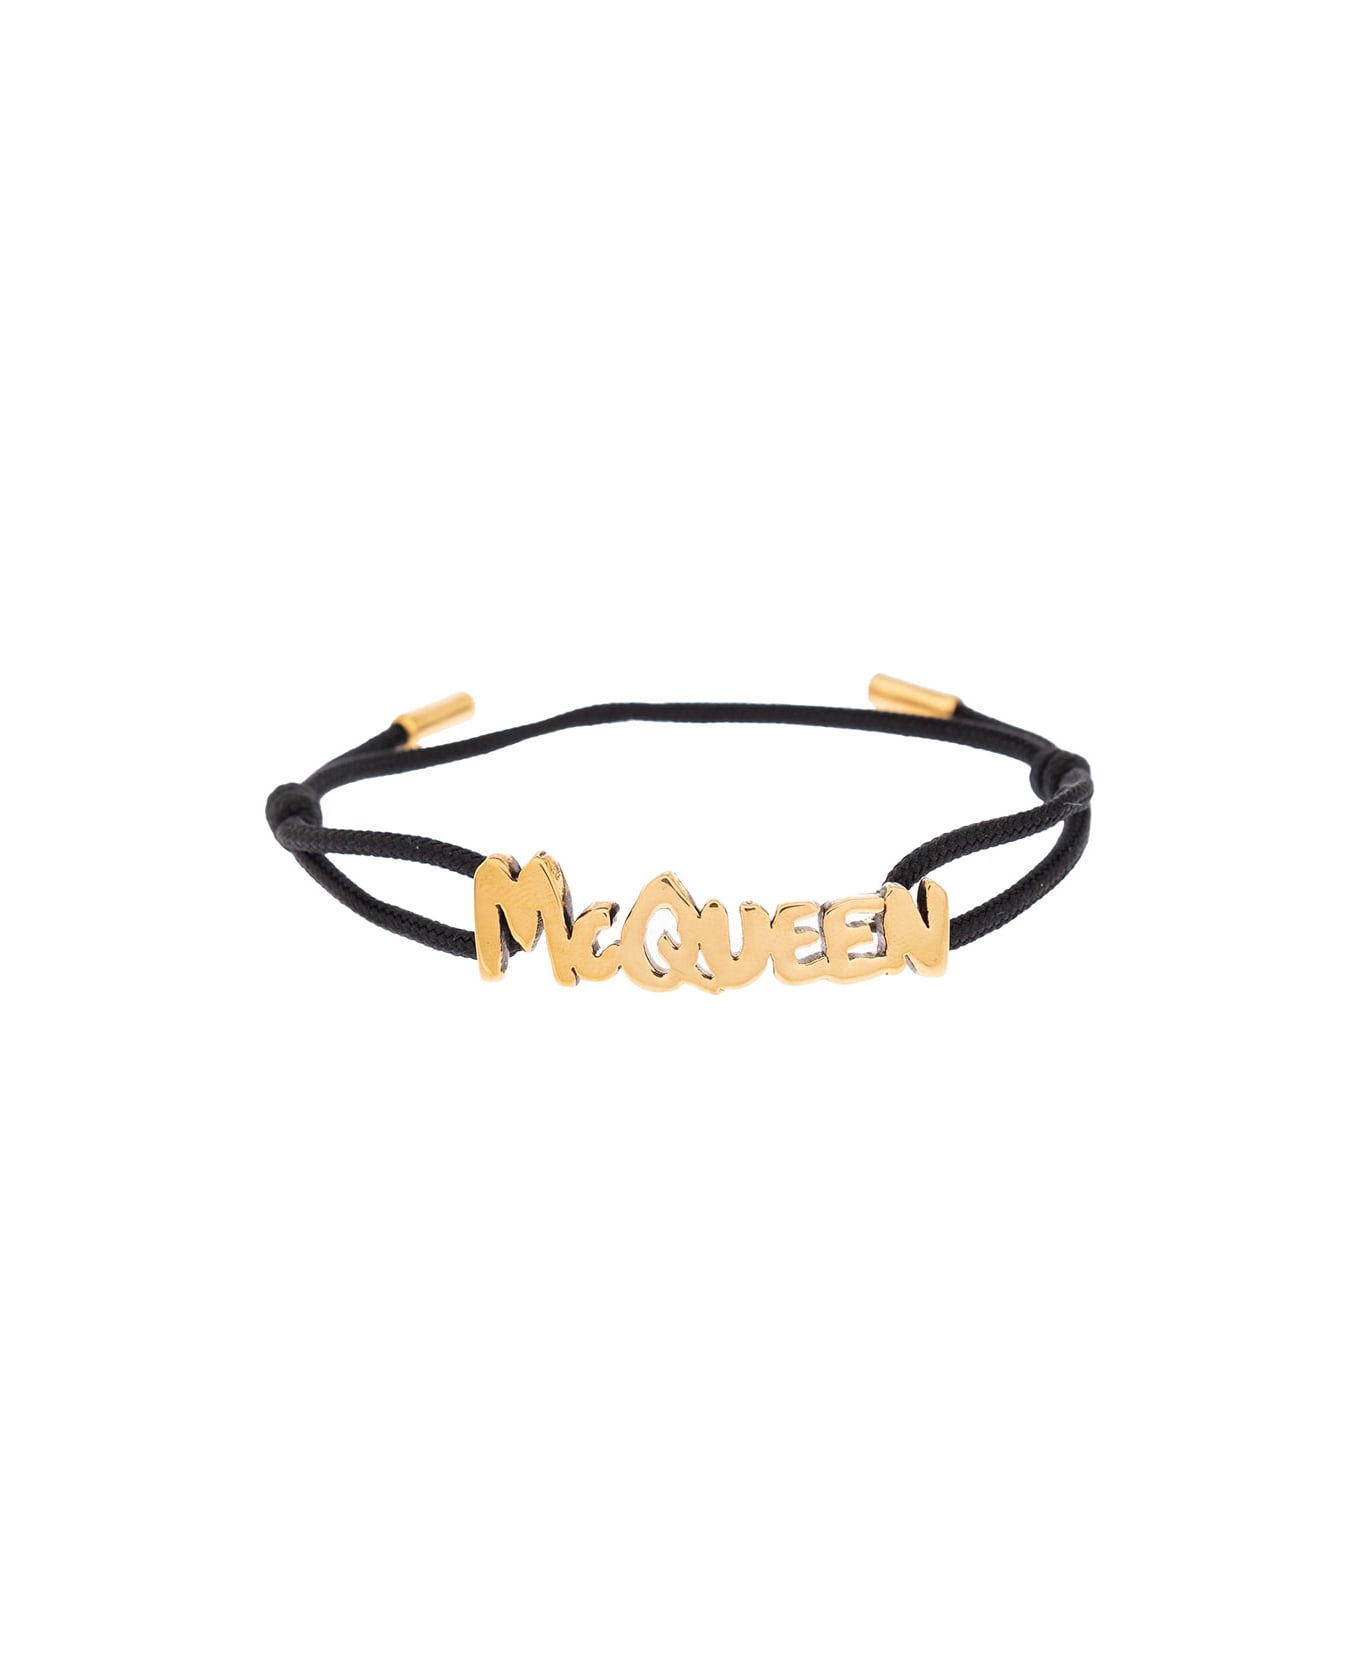 Alexander McQueen Woman's Black Graffiti Brass Bracelet With Logo - Black